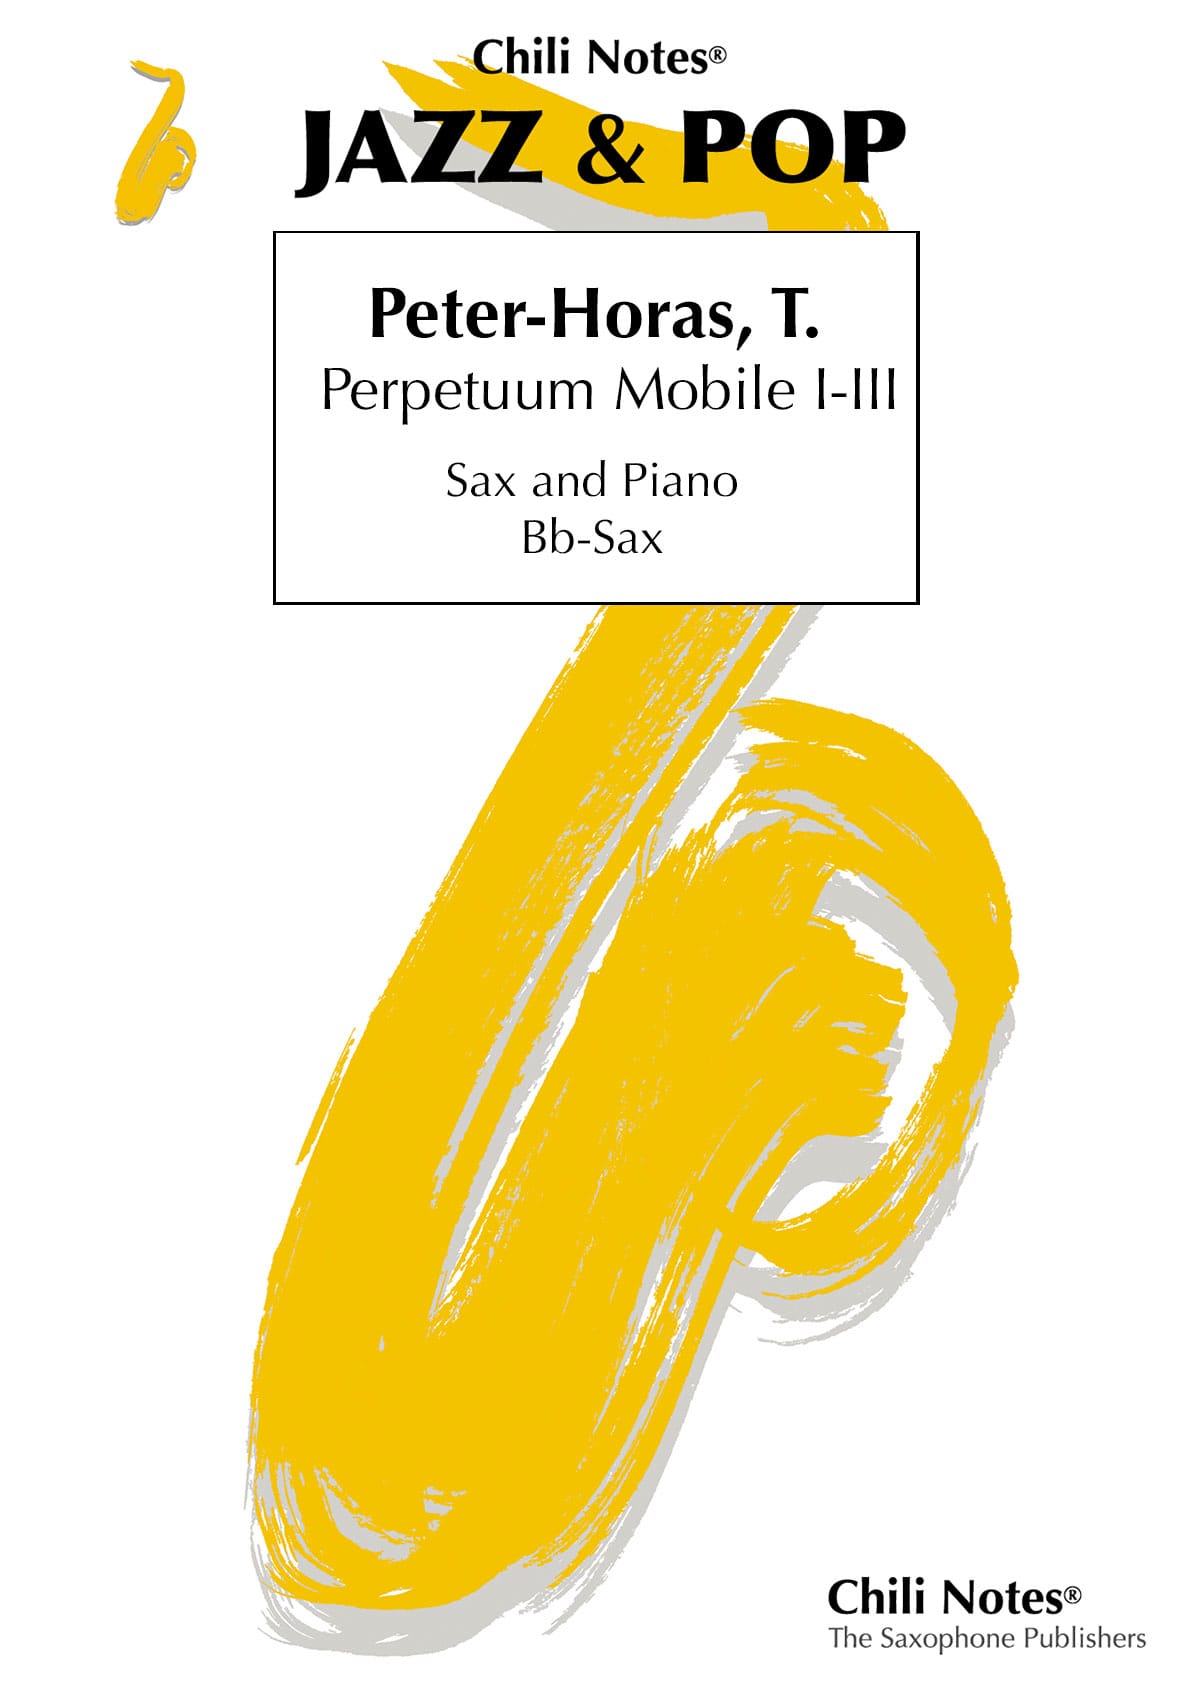 Perpetuum Mobile I-III (PETER-HORAS T) (PETER-HORAS T)